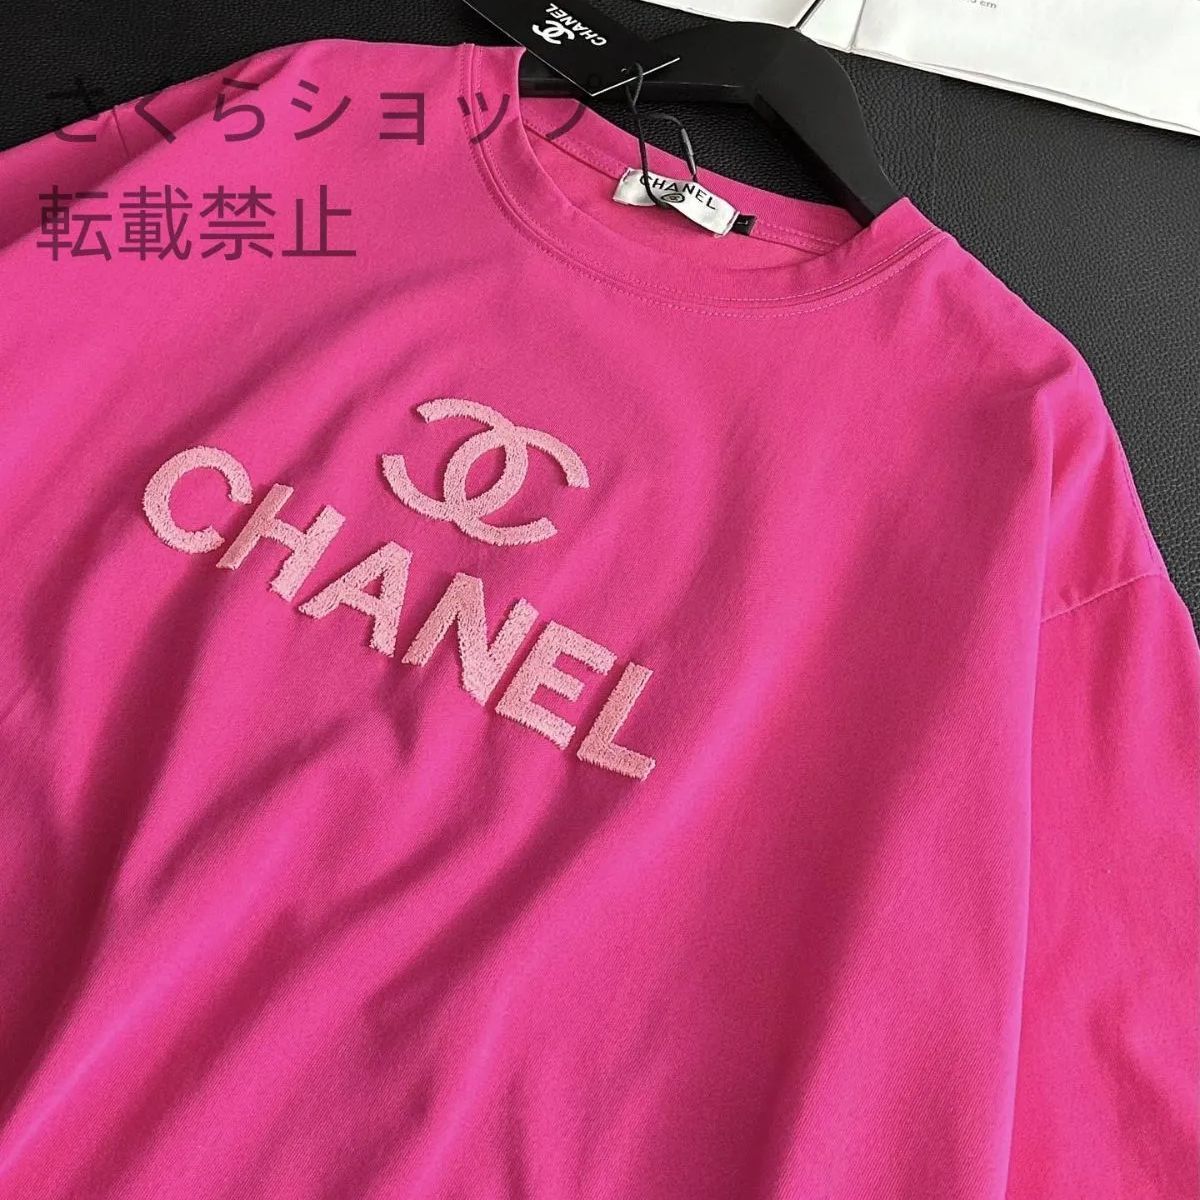 Chanel シャネル/ロゴローズ赤半袖Tシャツ - メルカリ